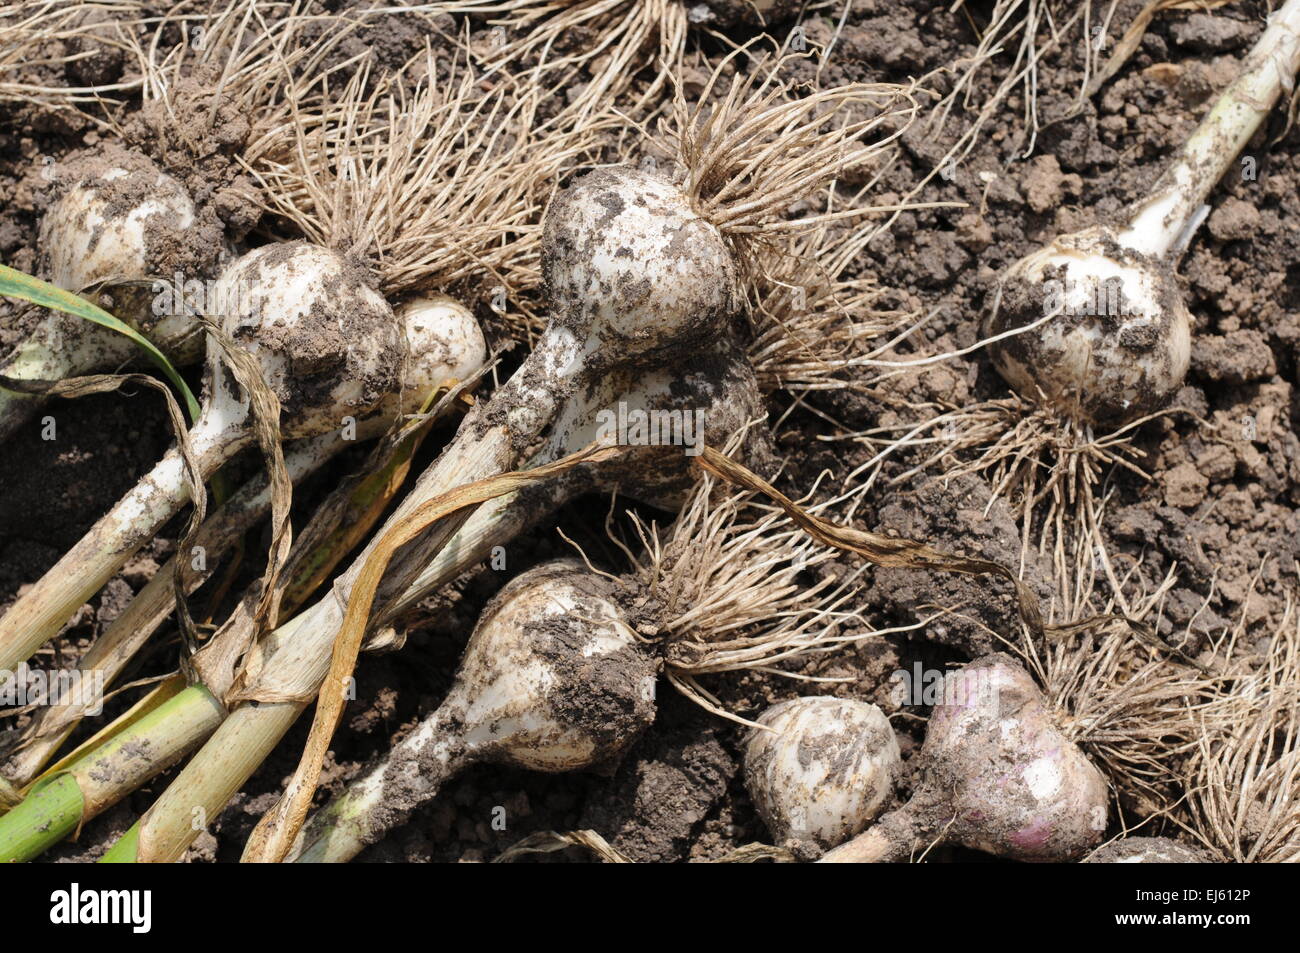 Gathered garlic dry on soil of the farm Stock Photo